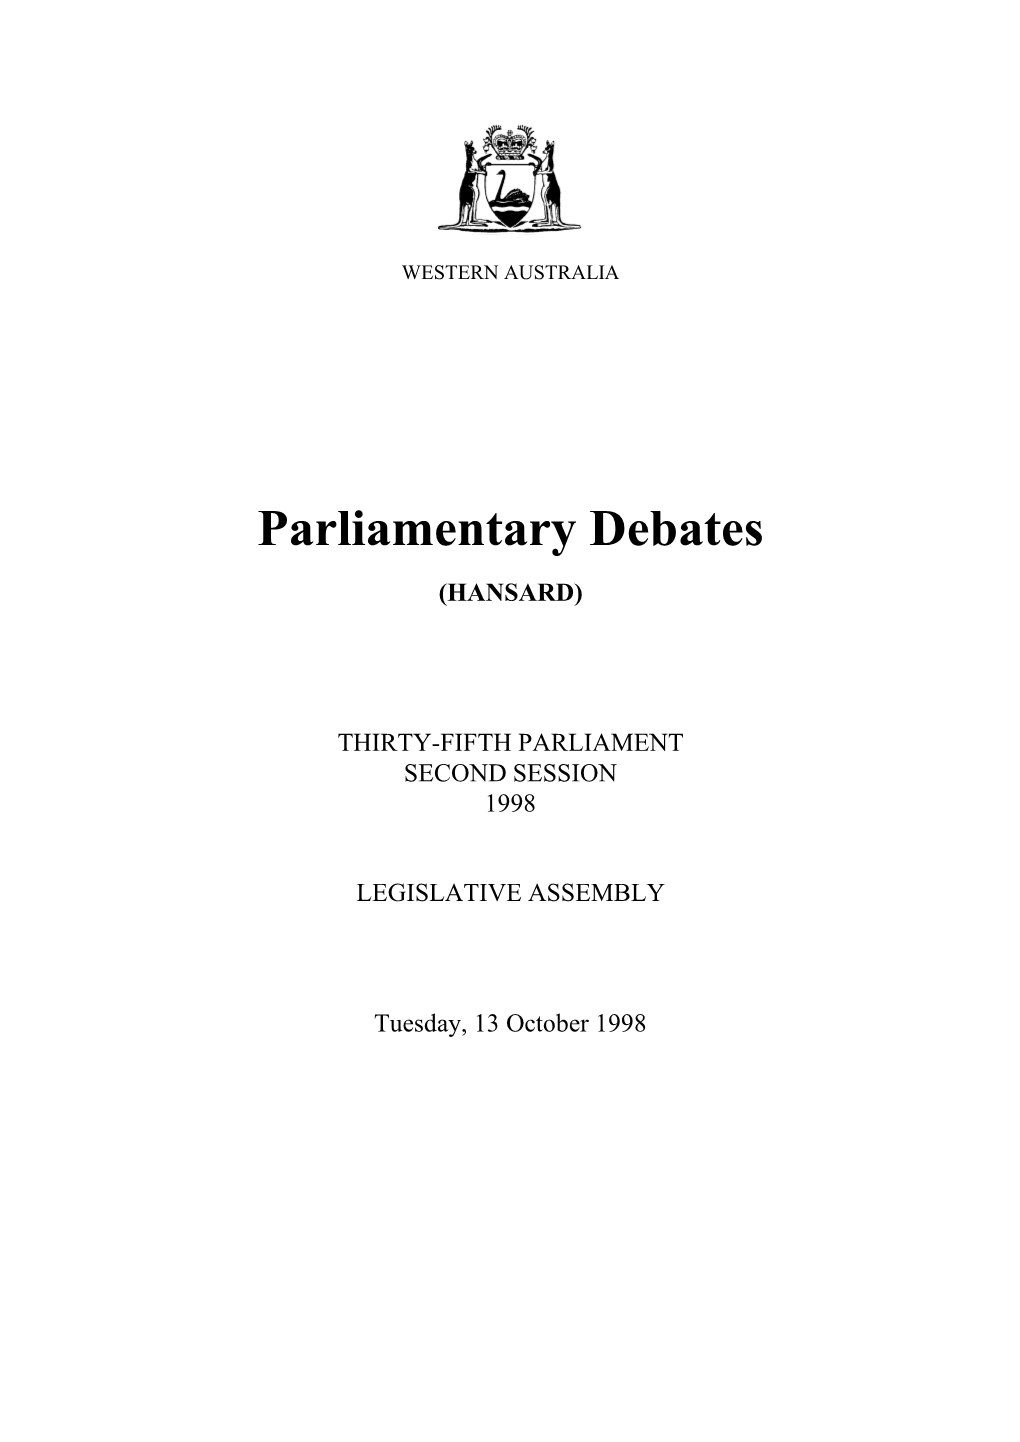 13 October 1998 Legislative Assembly Tuesday, 13 October 1998